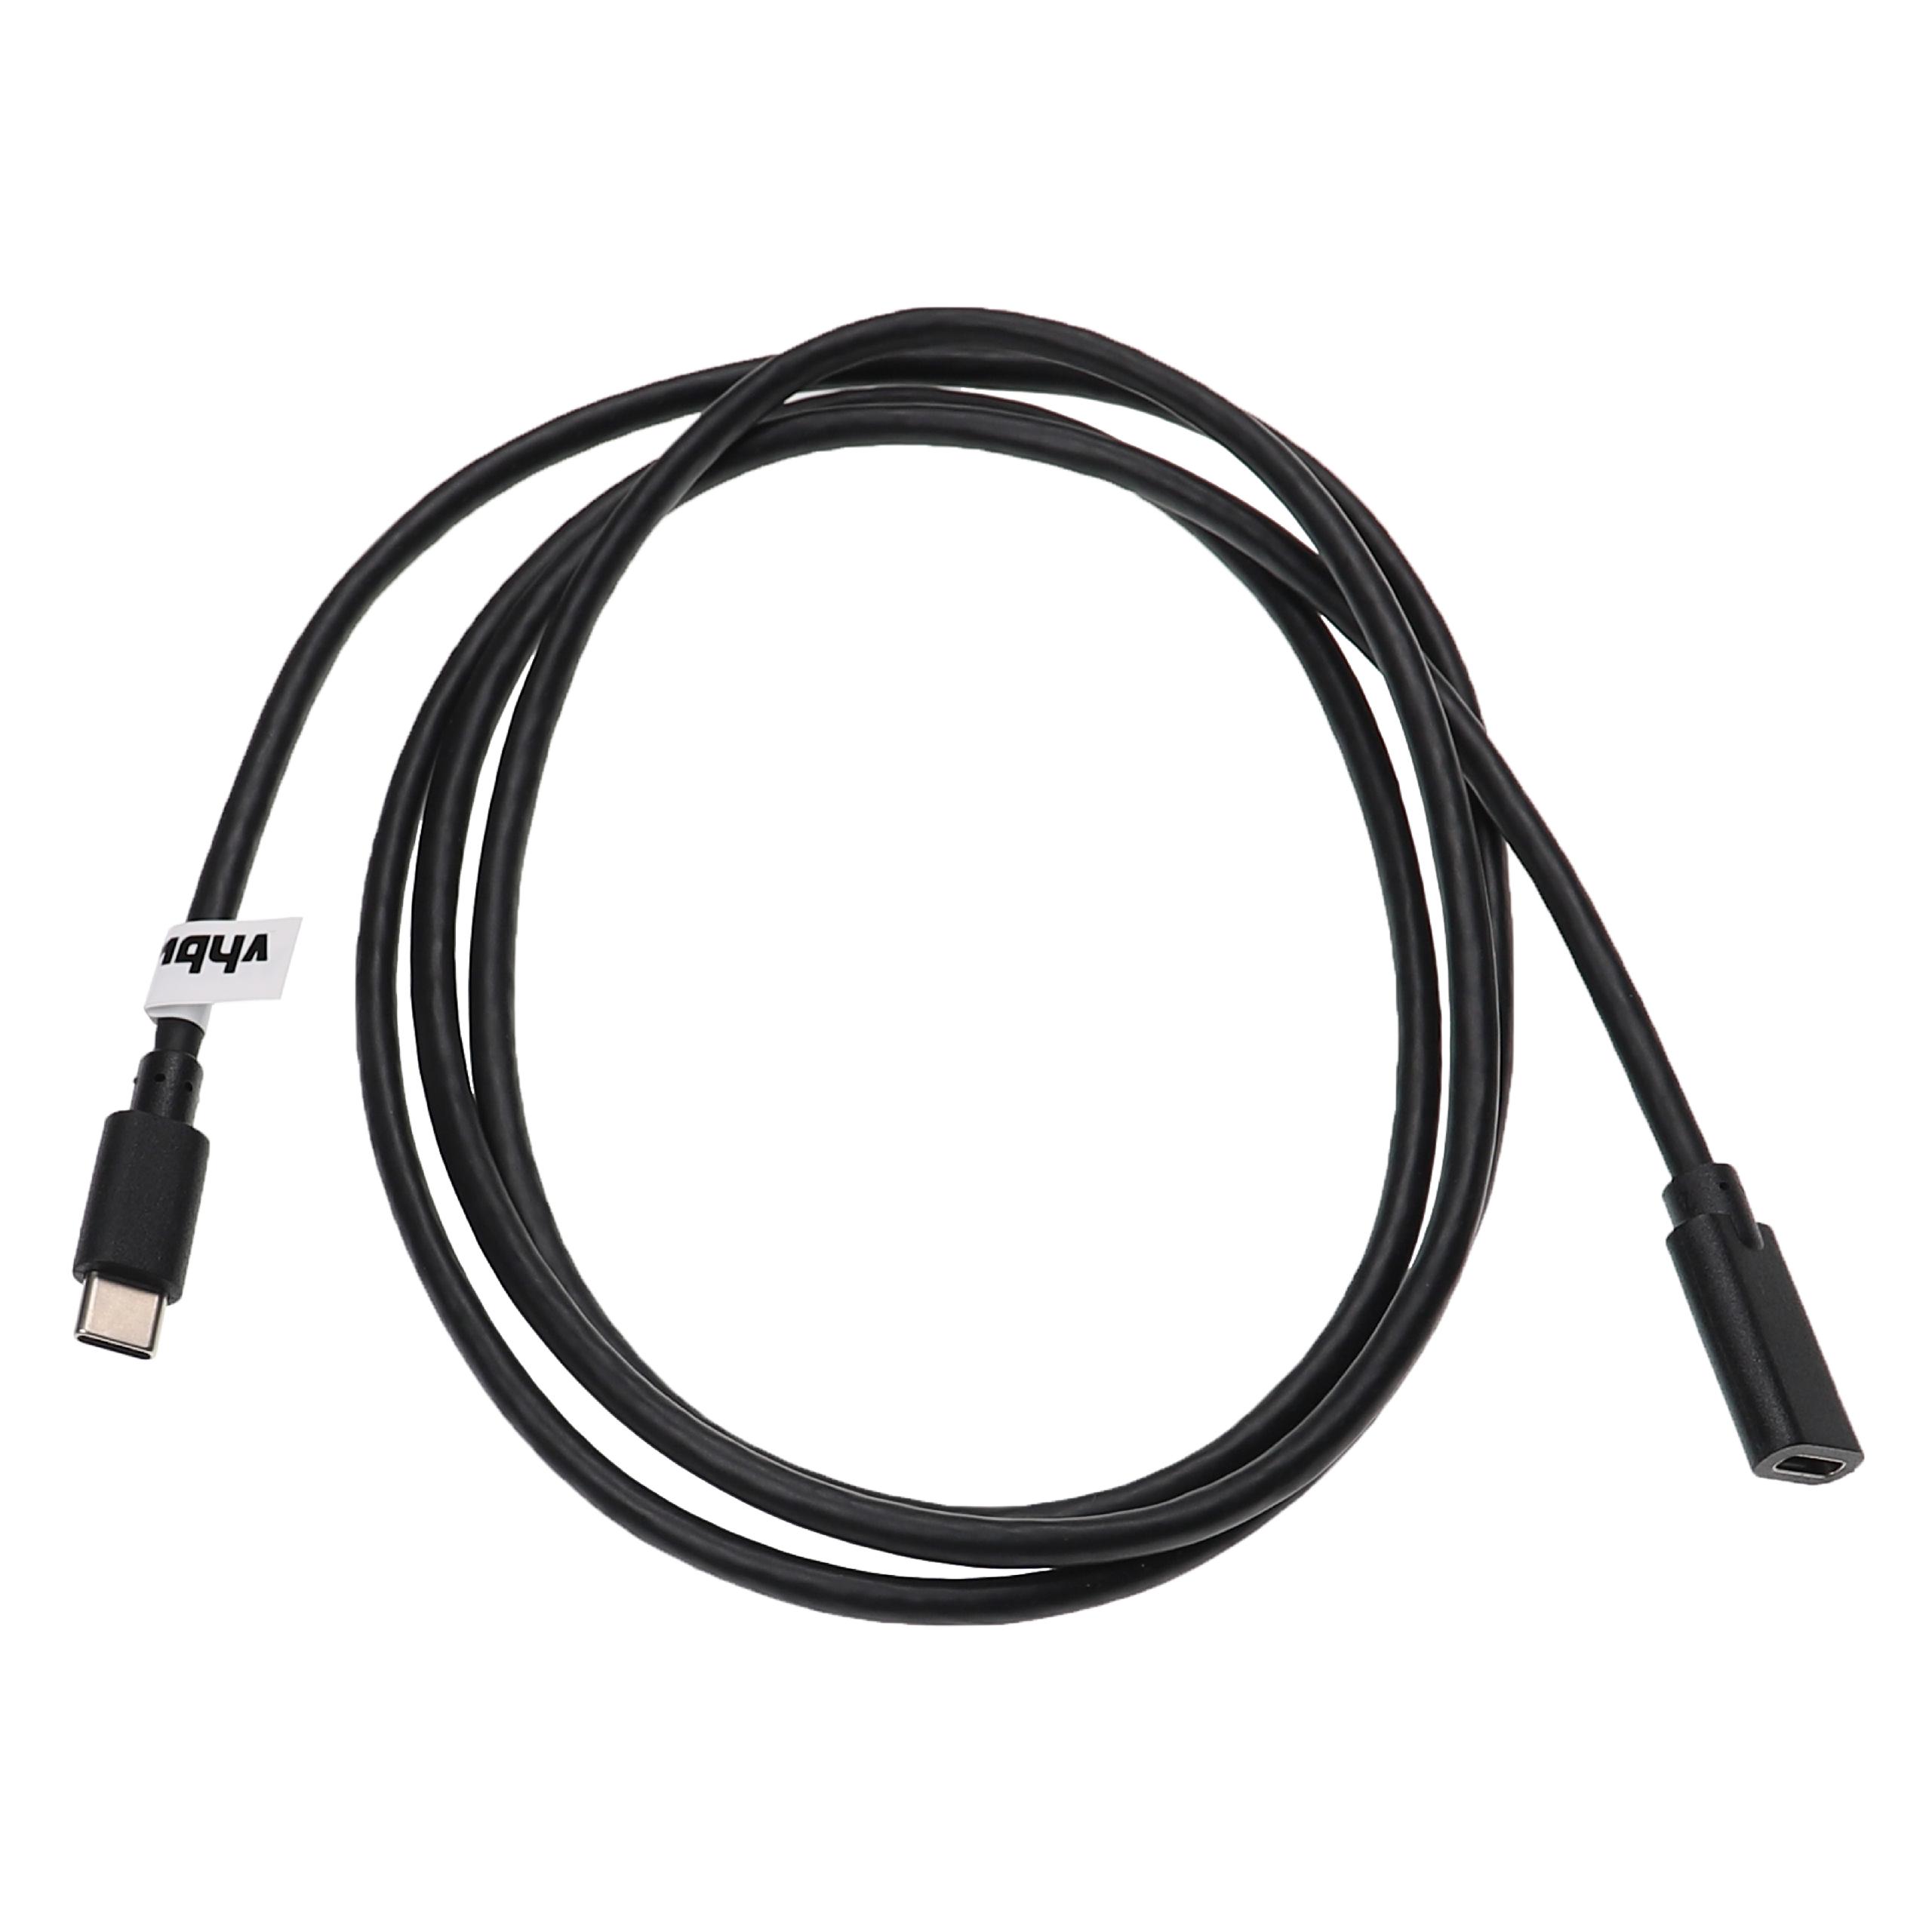 Cable alargador USB-C para diversas tablets, notebooks - 1,5 m negro, cable USB 3.1 C